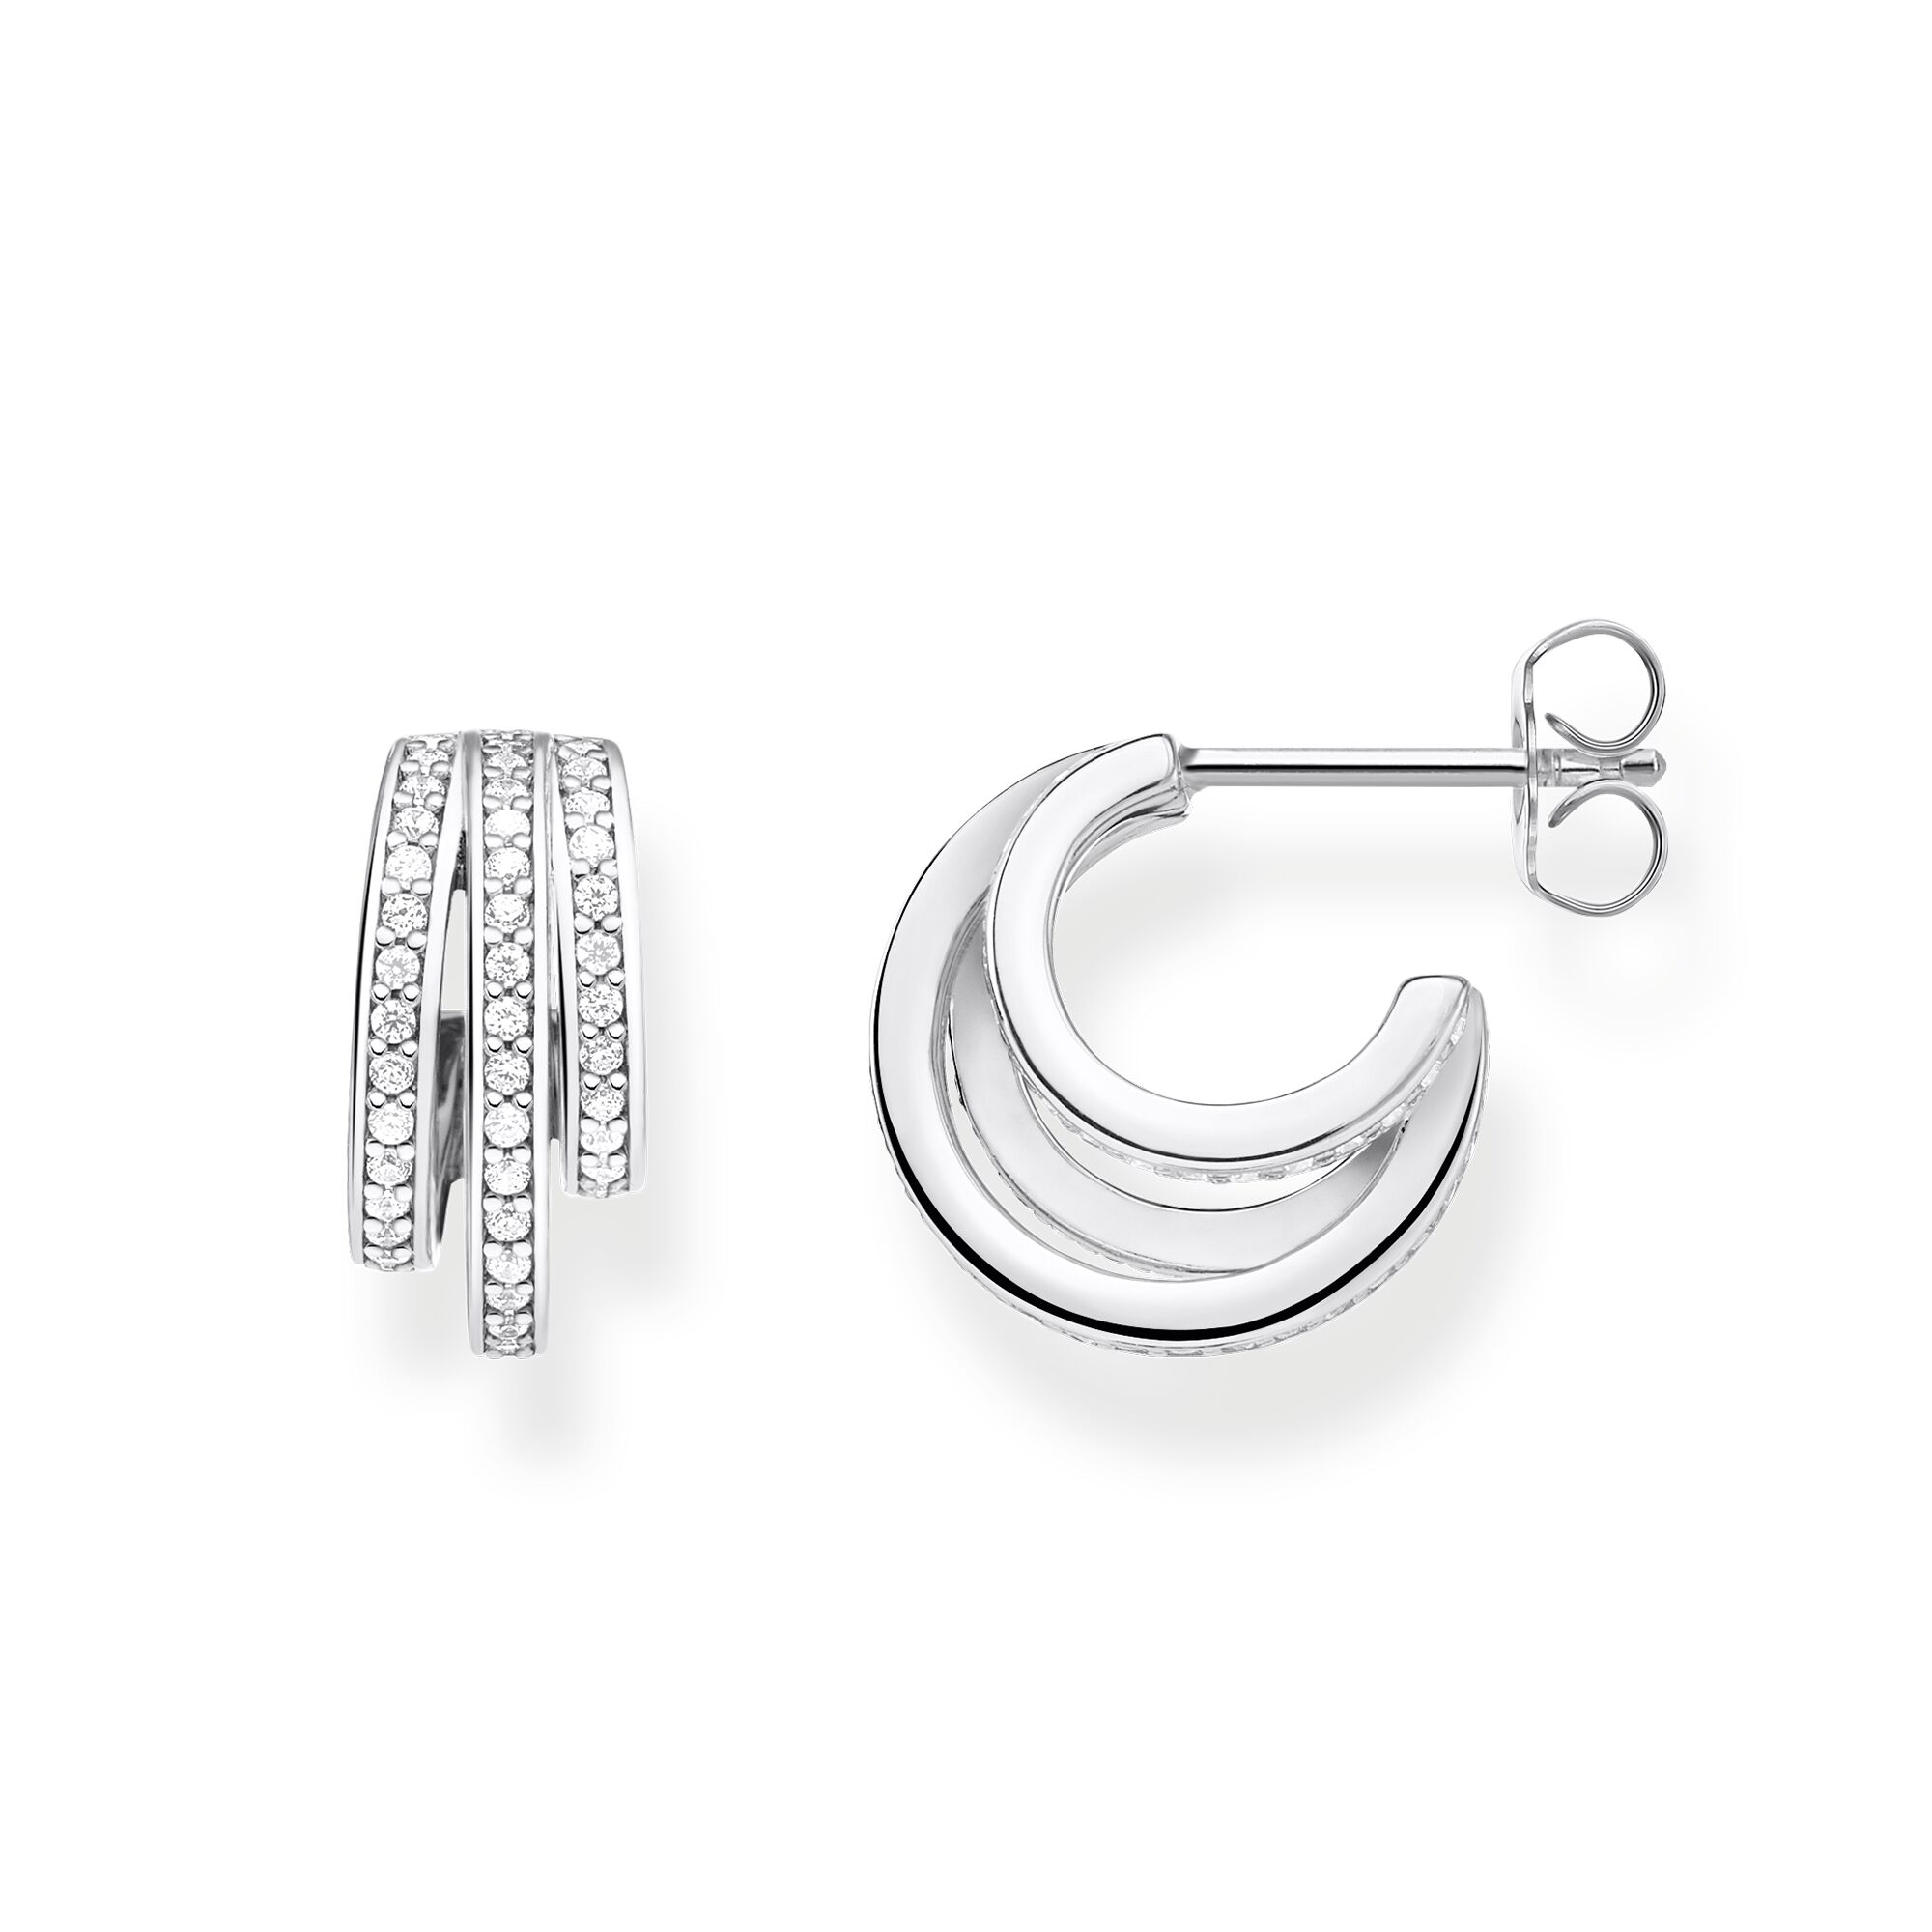 Wholesale Custom design 925 Sterling OEM/ODM Jewelry silver hoop earrings with white zirconia OEM jewelry